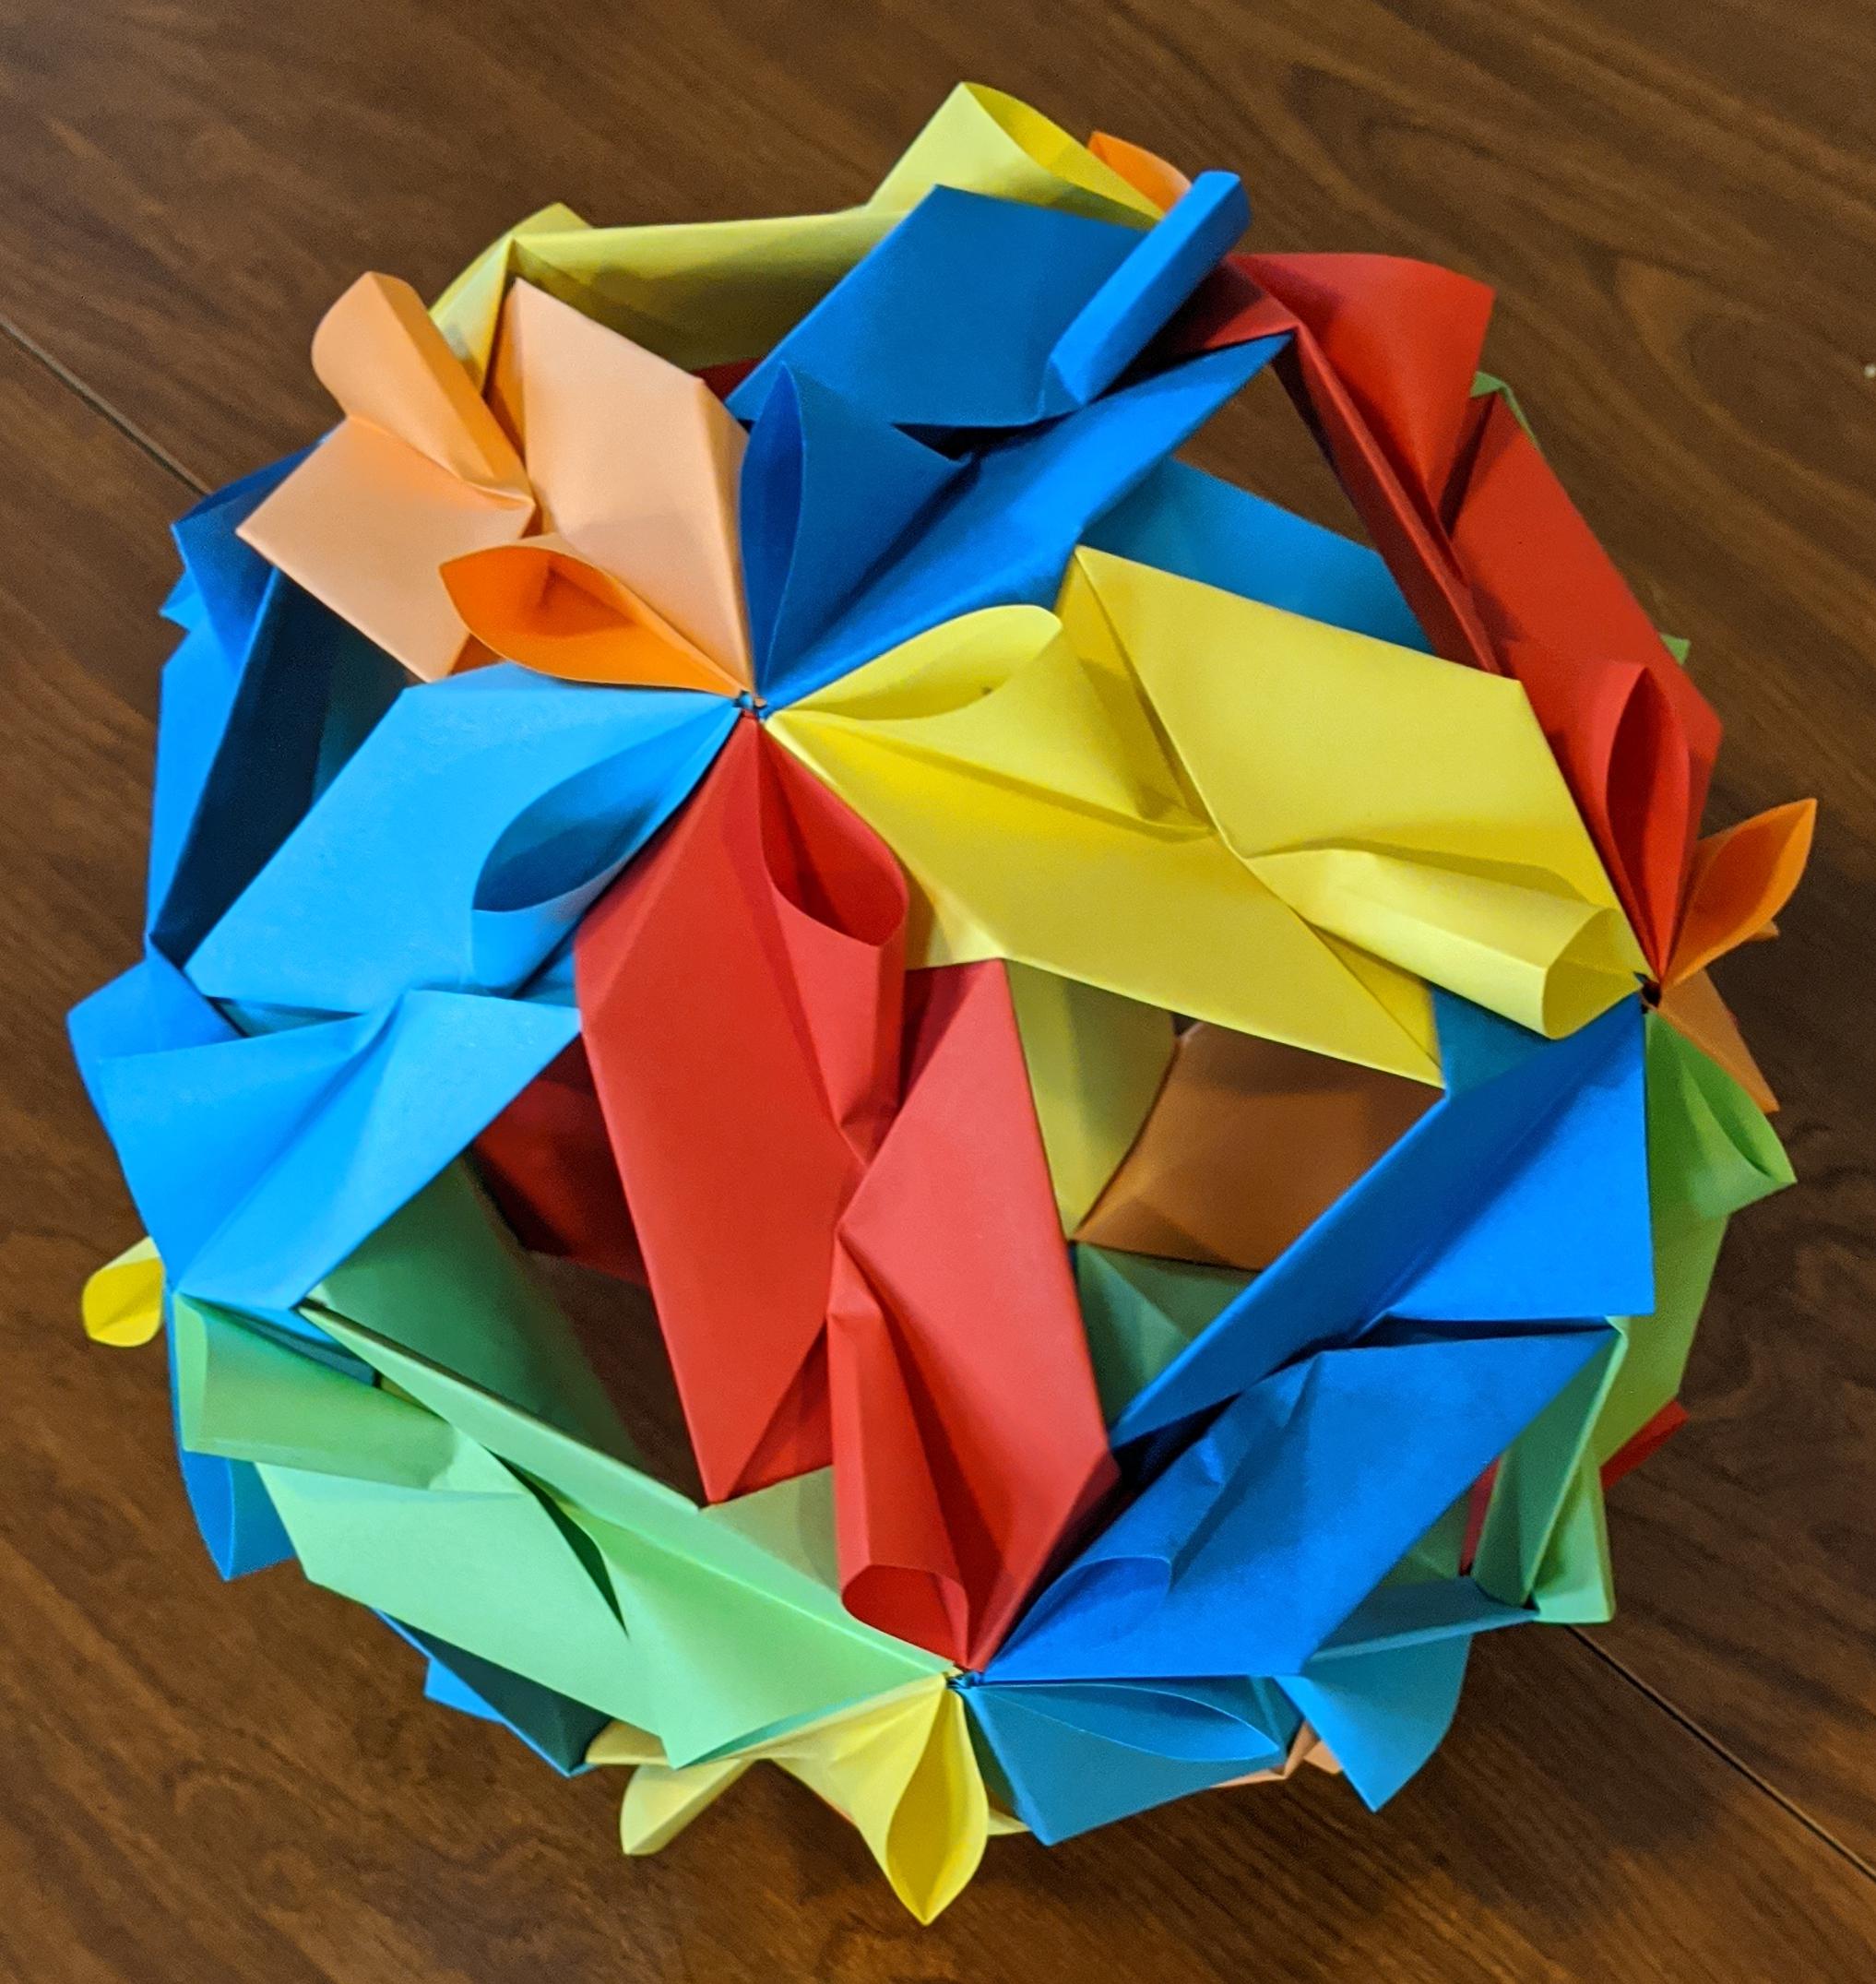 20. Origami Icossahedron